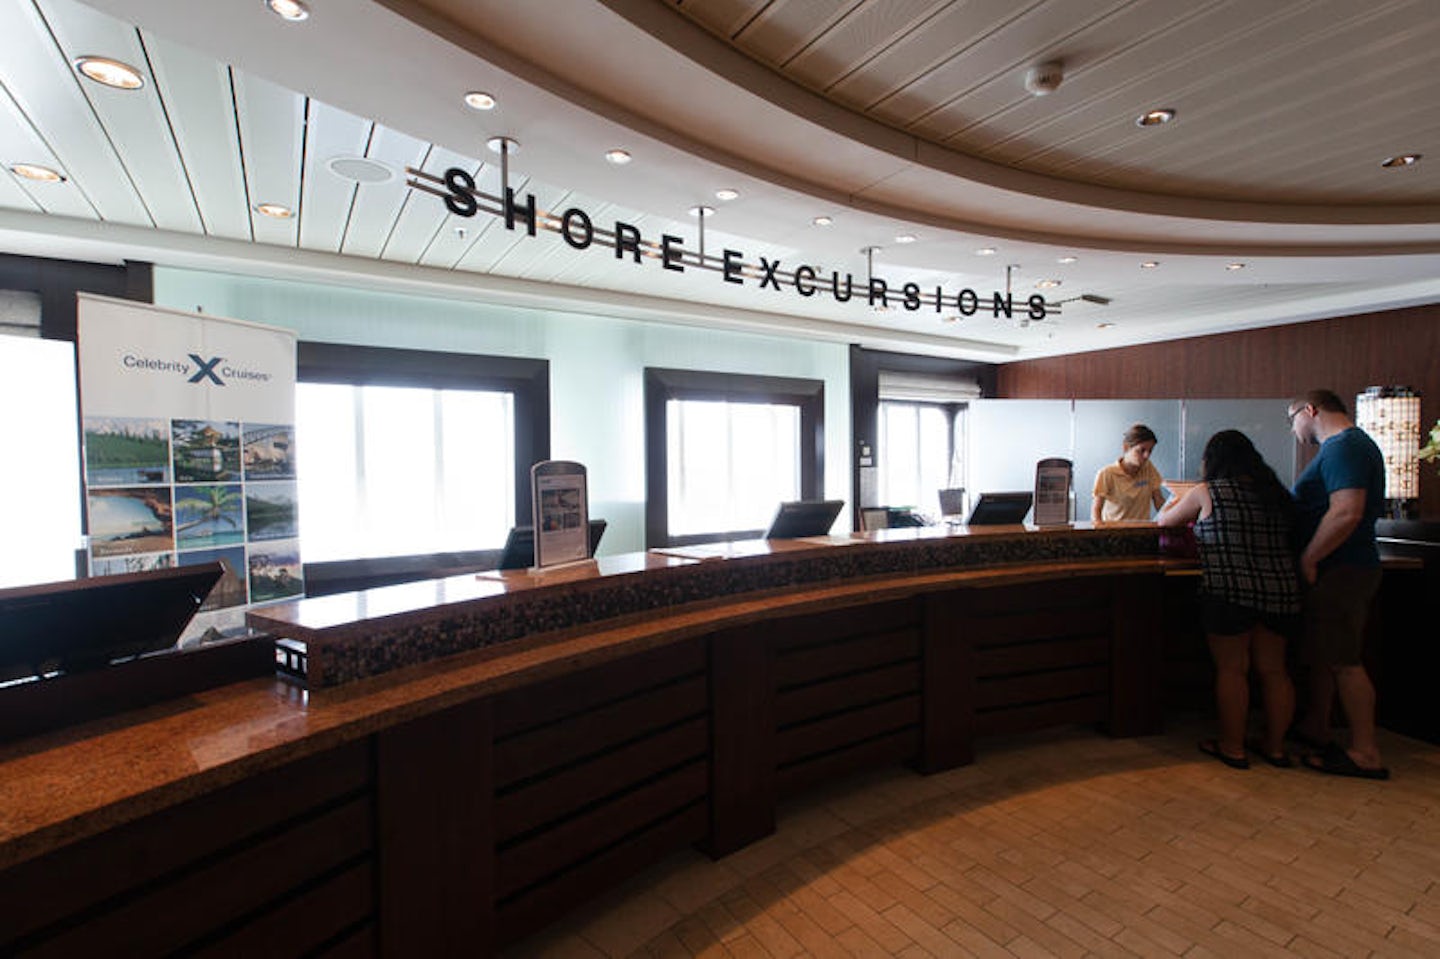 Shore Excursions Desk on Celebrity Silhouette